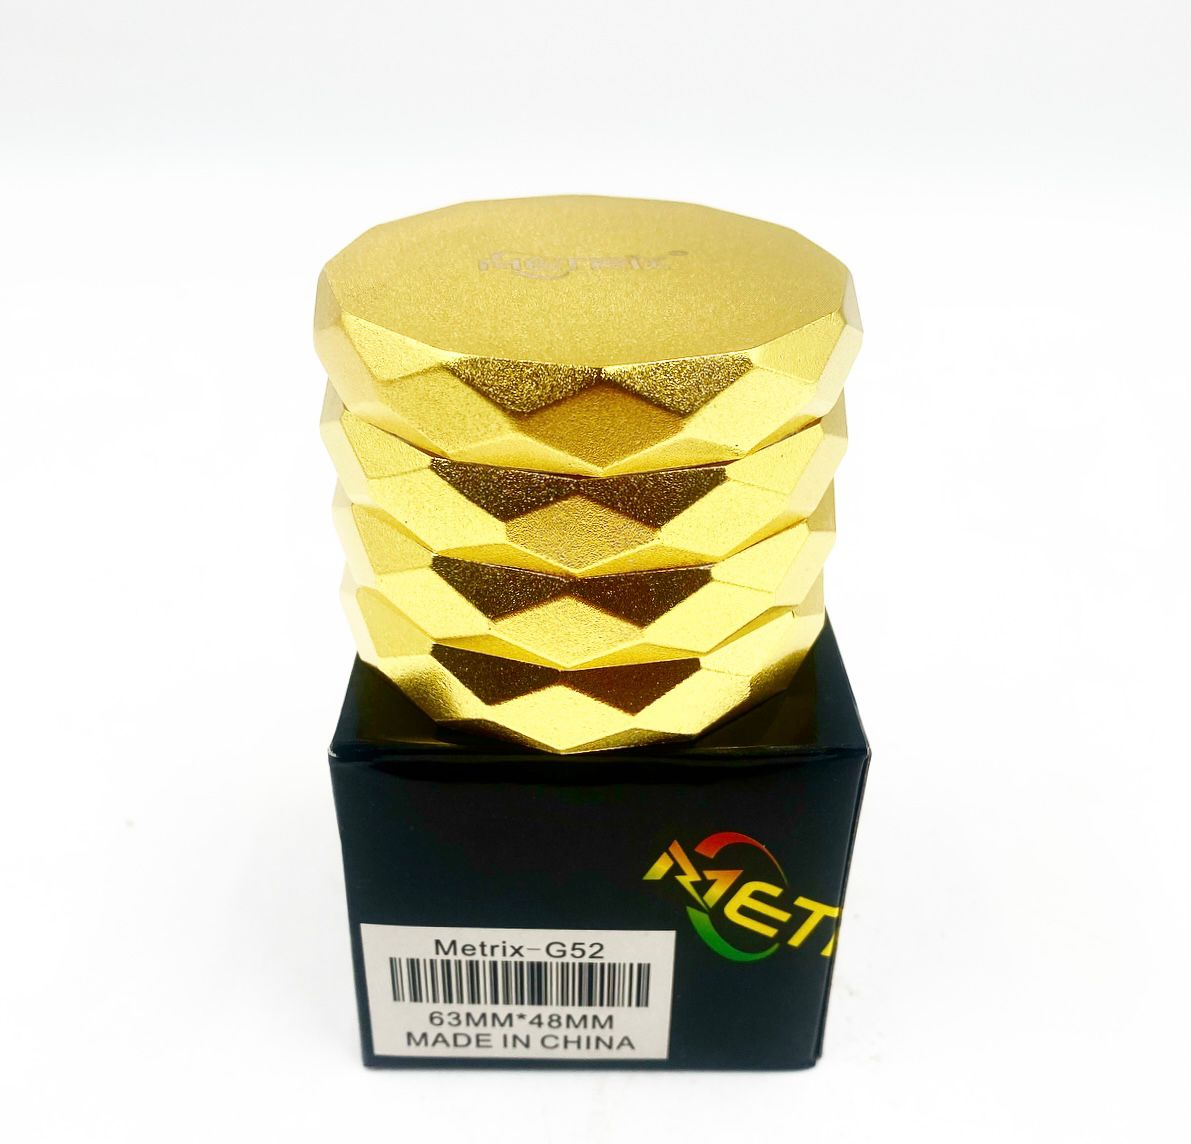 Metrix-G52 Yellow Gold Grinder